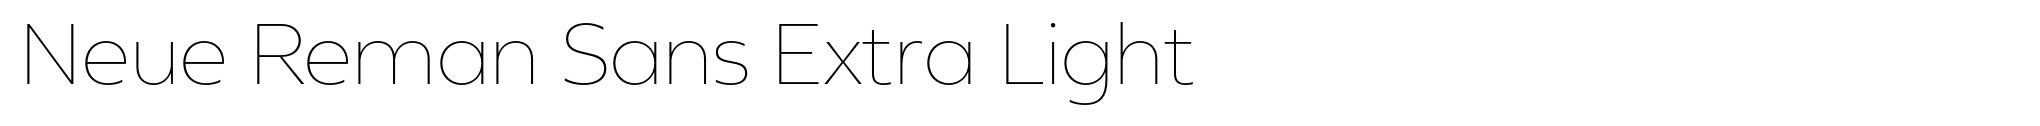 Neue Reman Sans Extra Light image